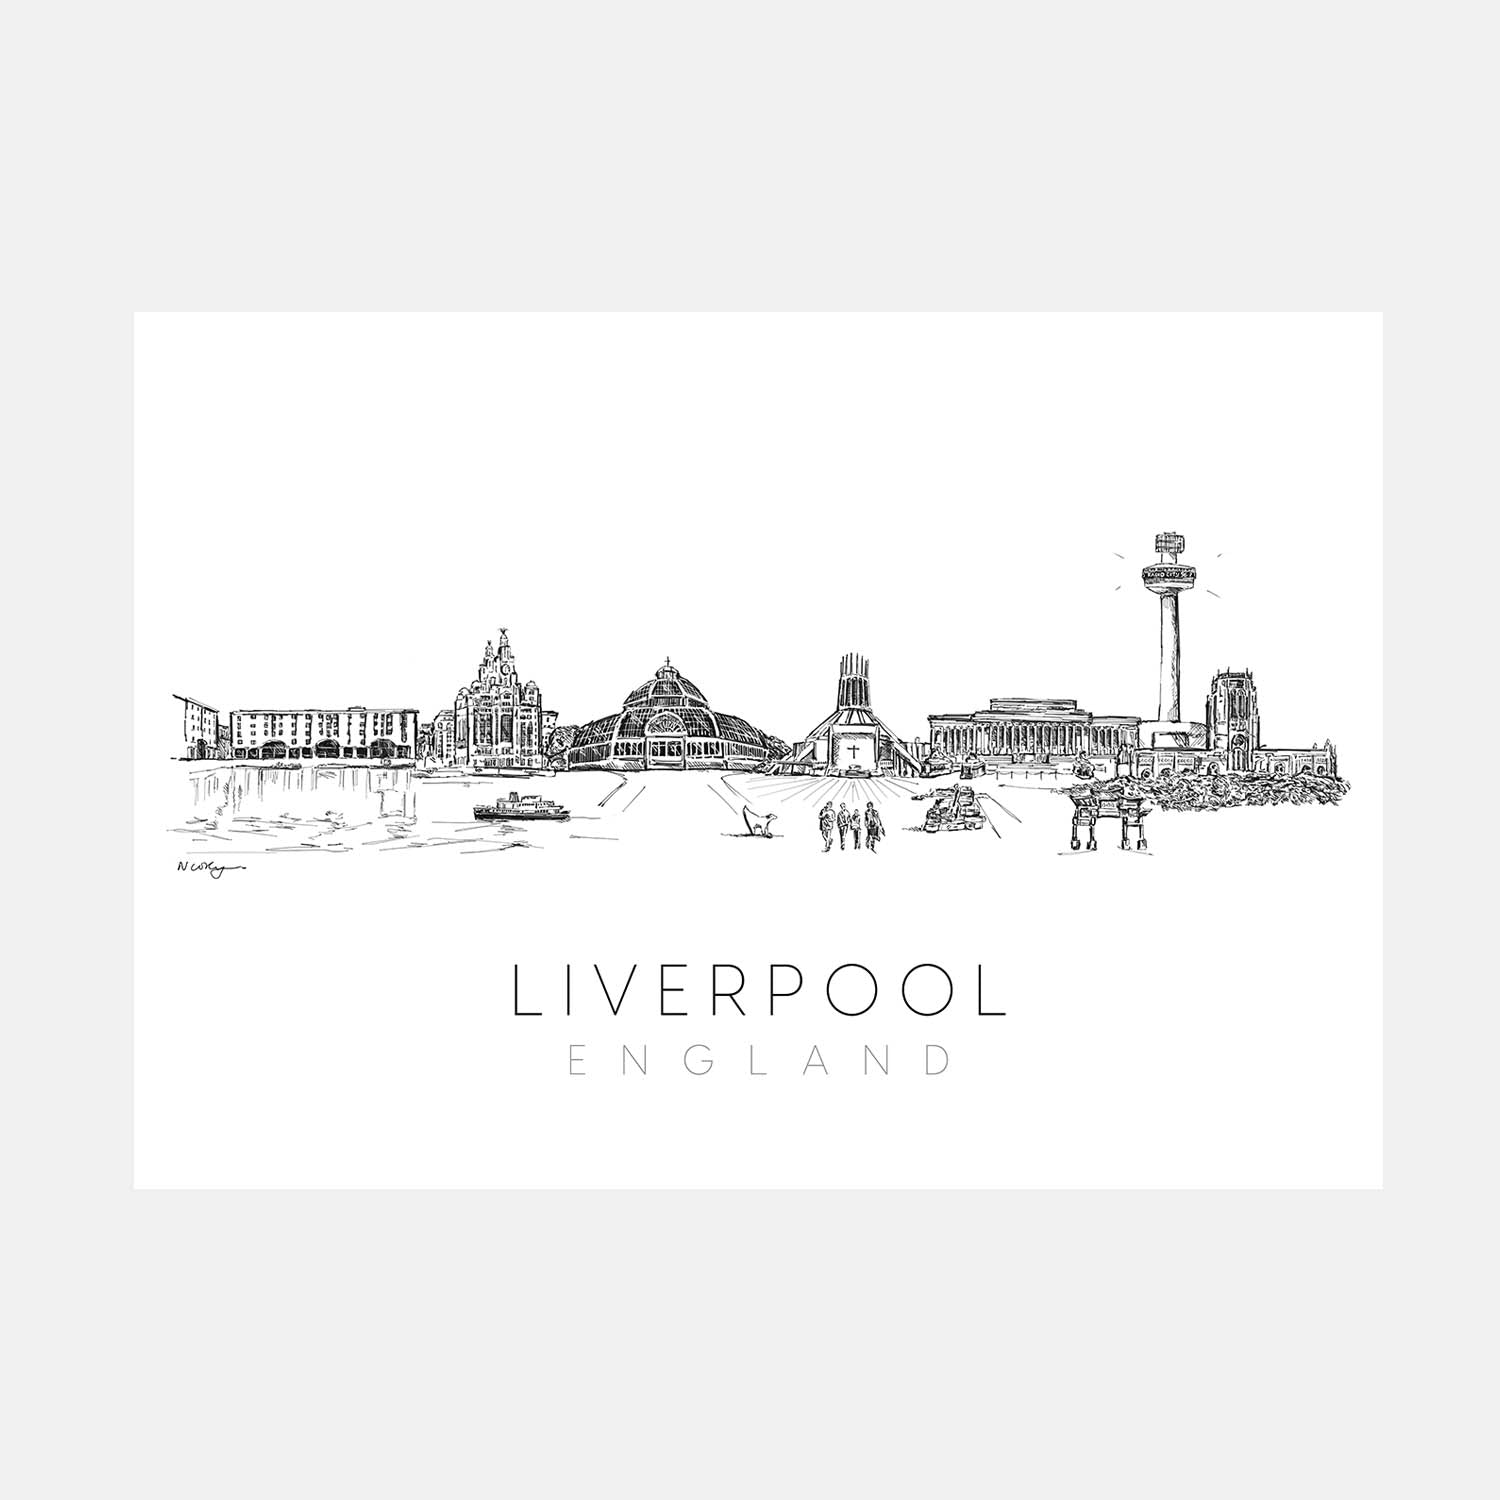 Liverpool Skyline Art Print